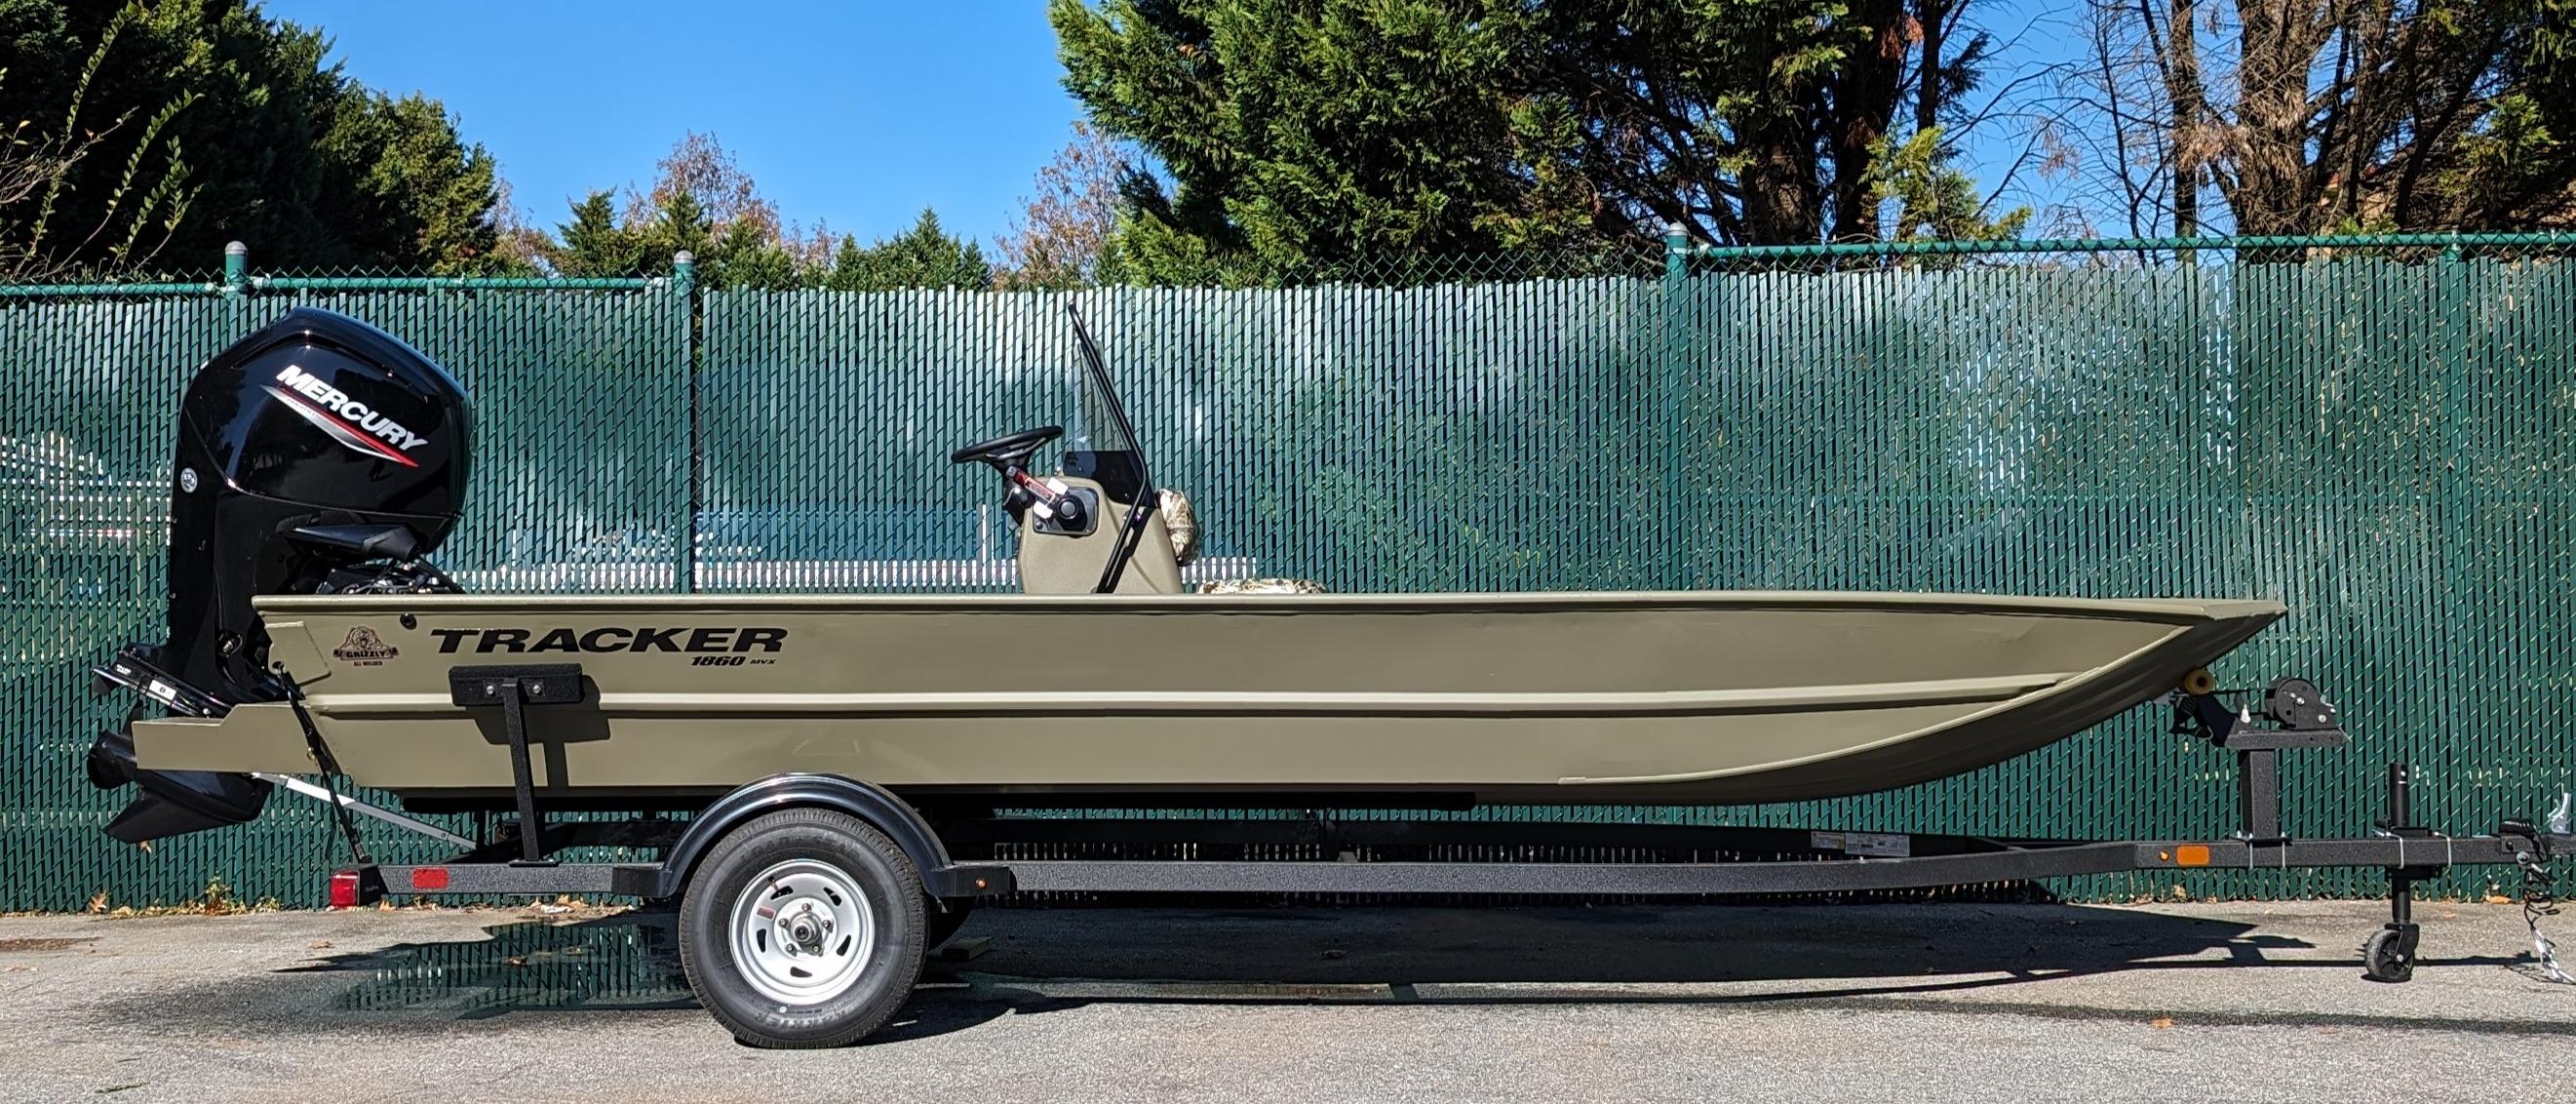 Outboard jon boat - GRIZZLY® 1448 - Tracker - sport-fishing